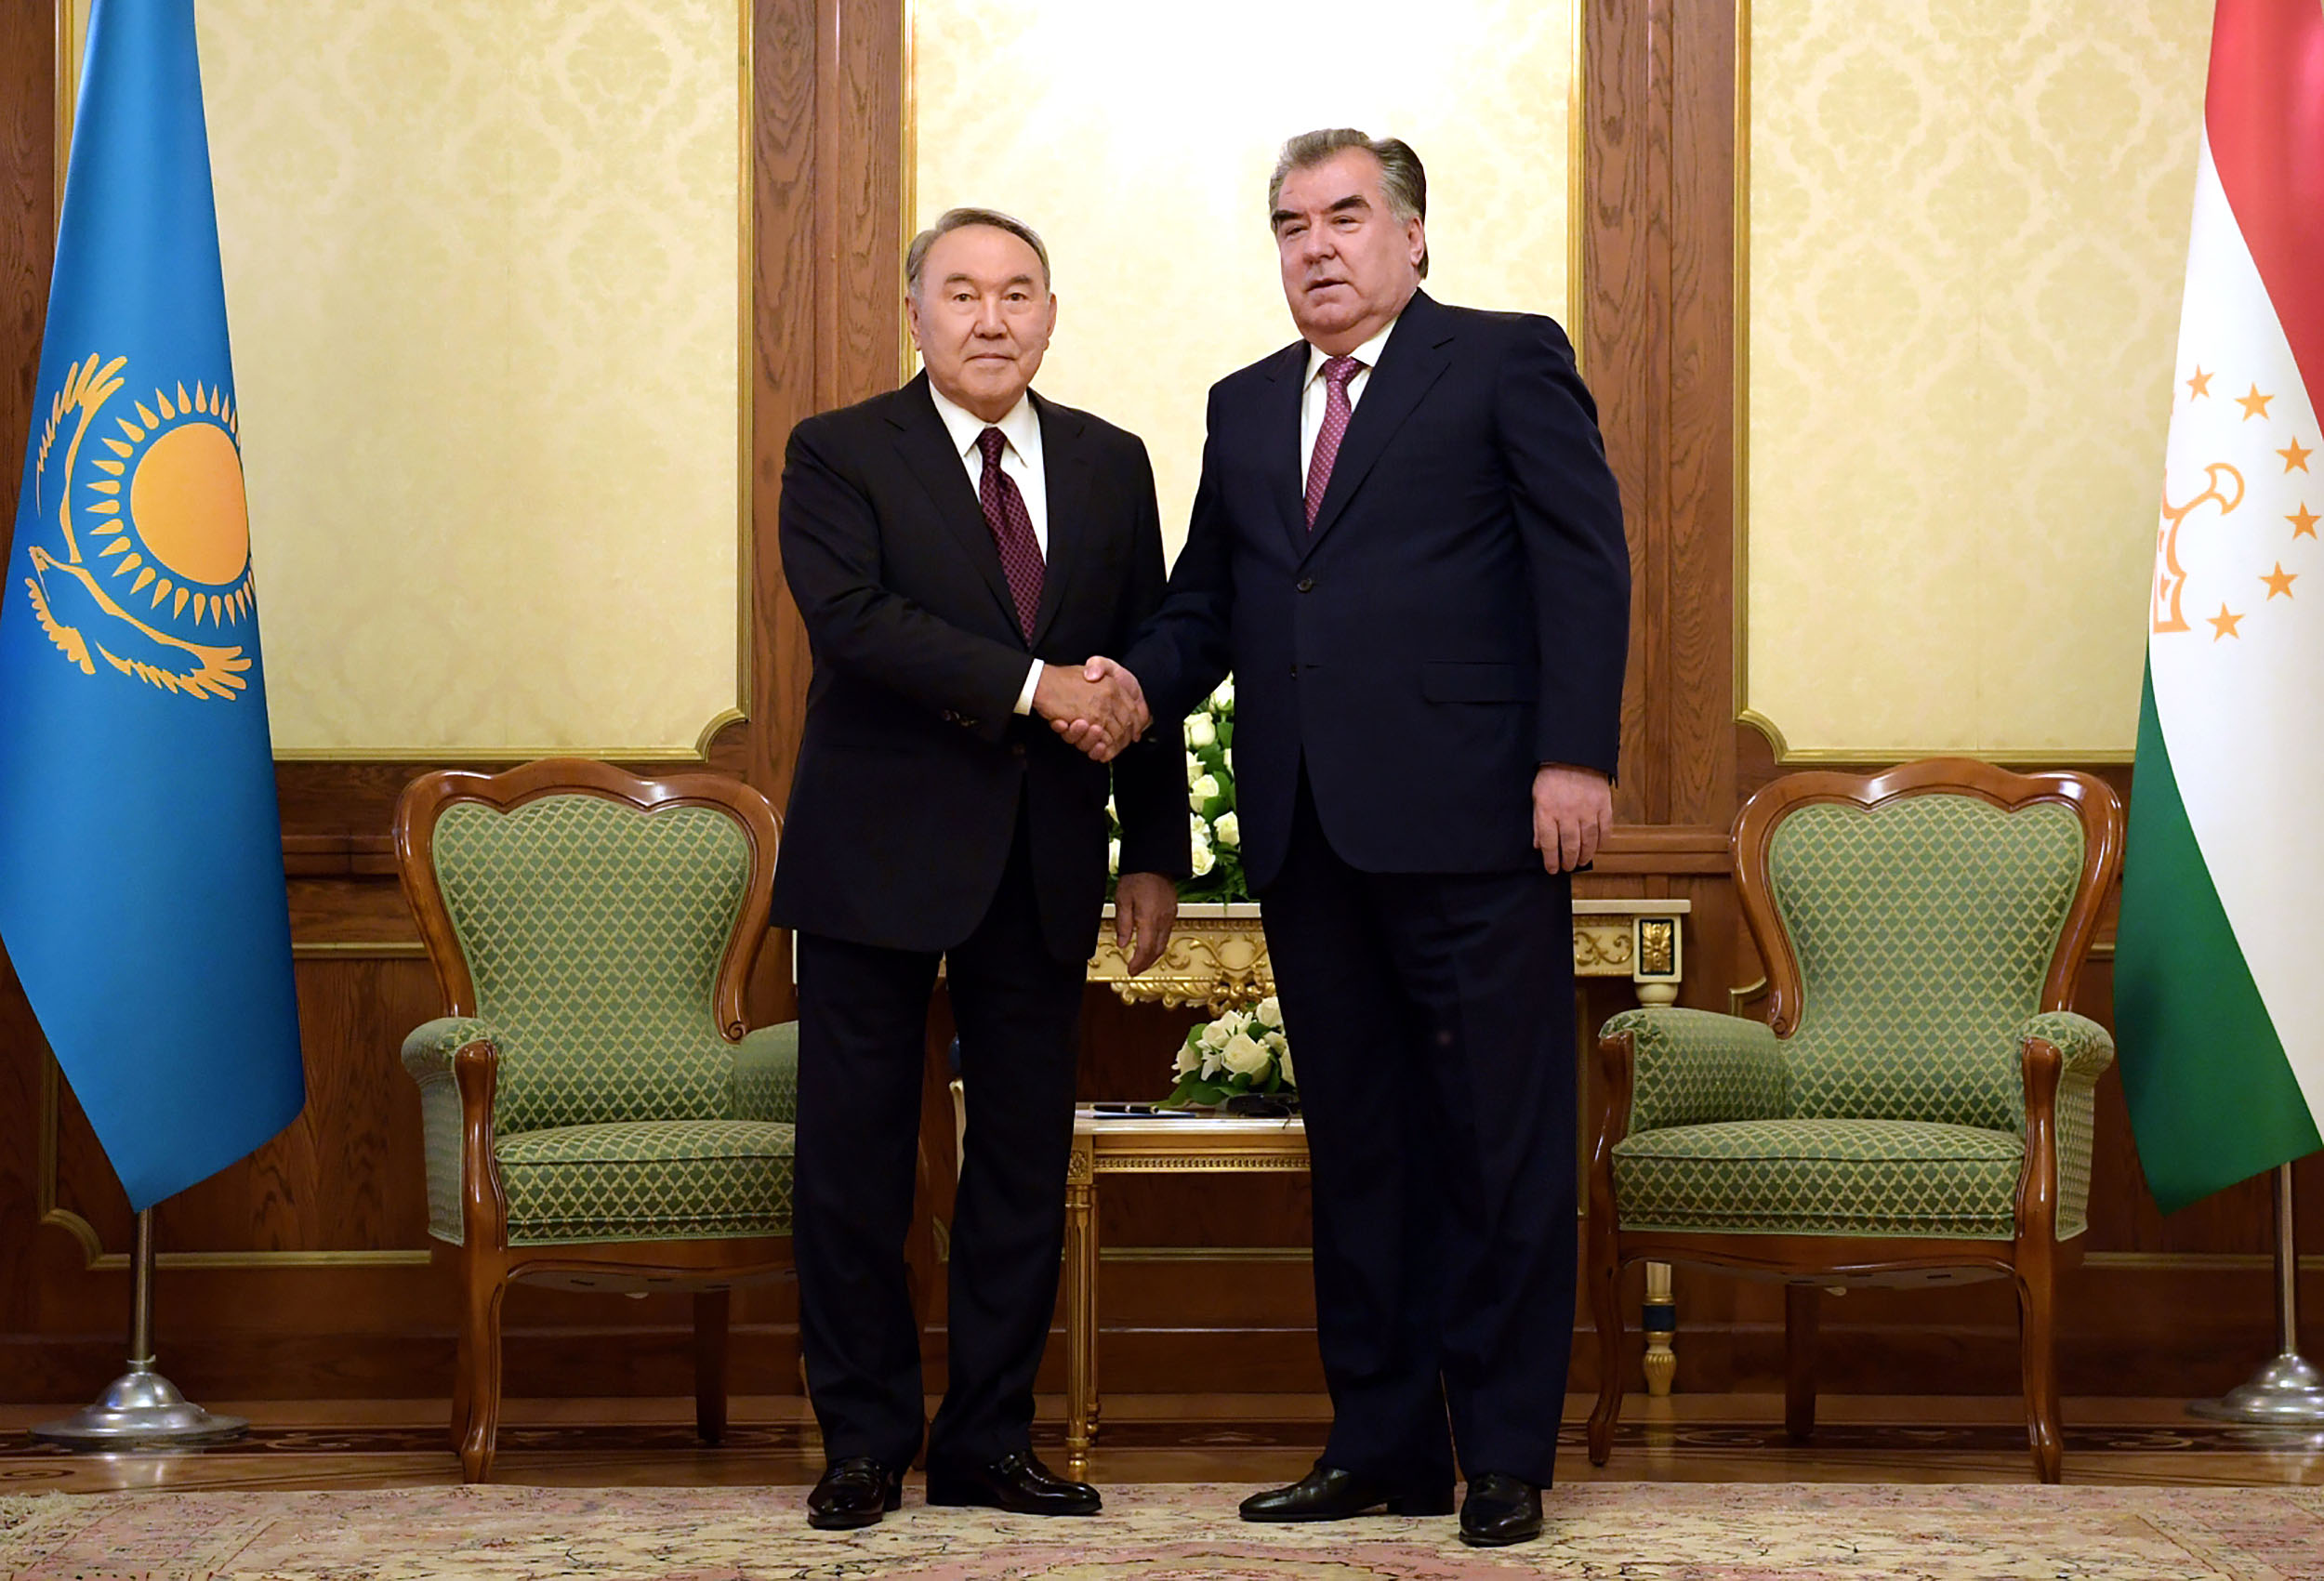 Nursultan Nazarbayev meets with Emomali Rahmon in Dushanbe